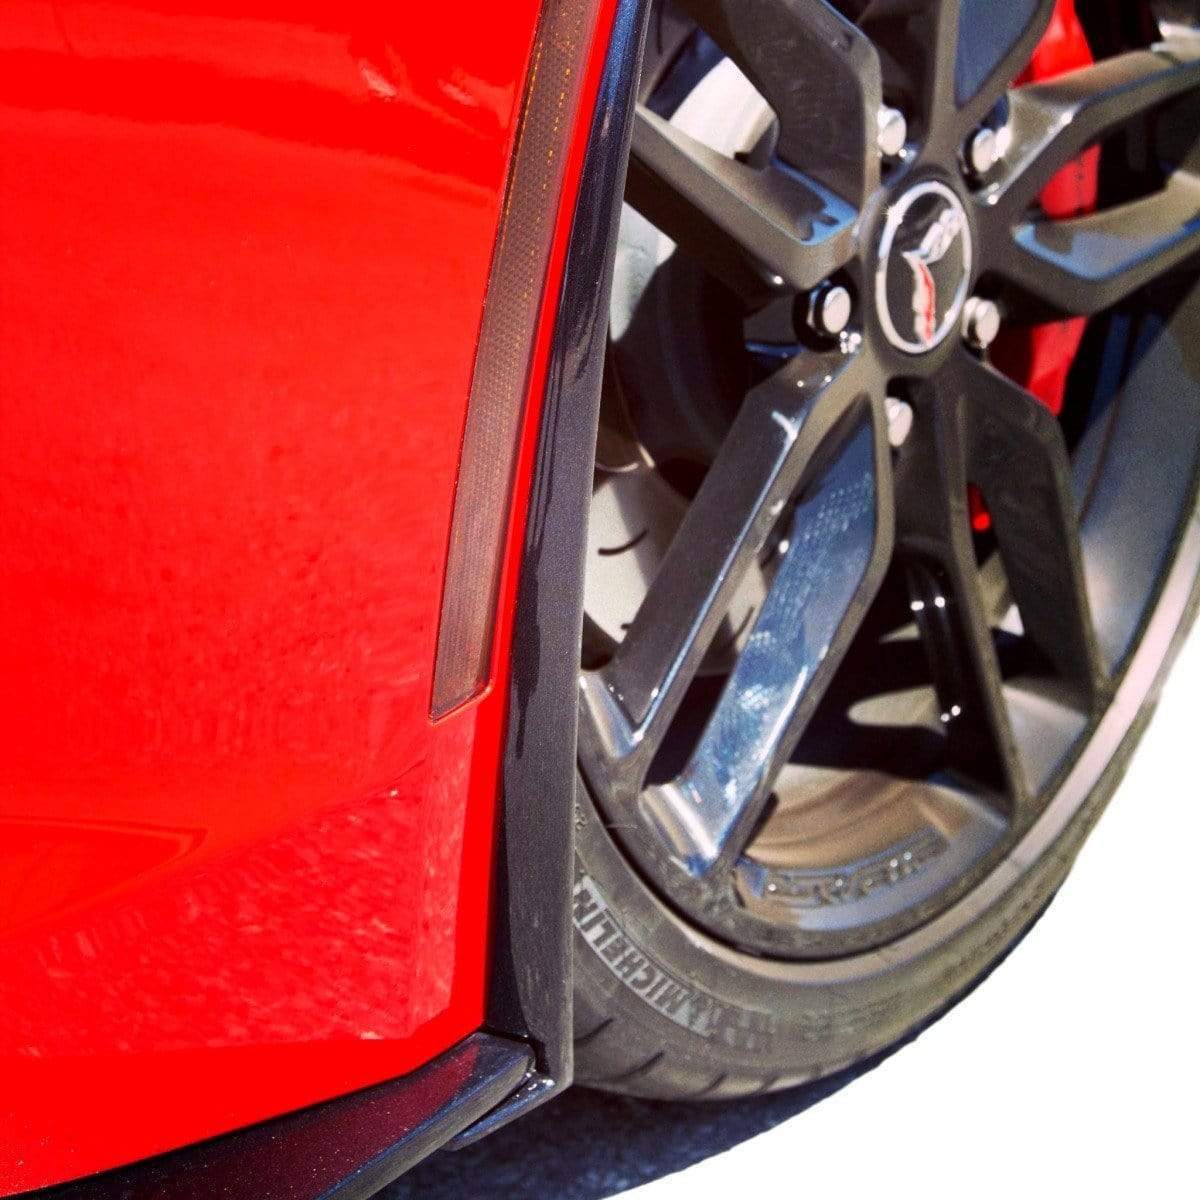 ACS-C7 Front Wheel Deflectors for C7 Corvette Stingray (45-4-007) - Carbon Flash Metallic Black Finish - Improves Aerodynamics, Brake Cooling, and Reduces Dust Buildup.